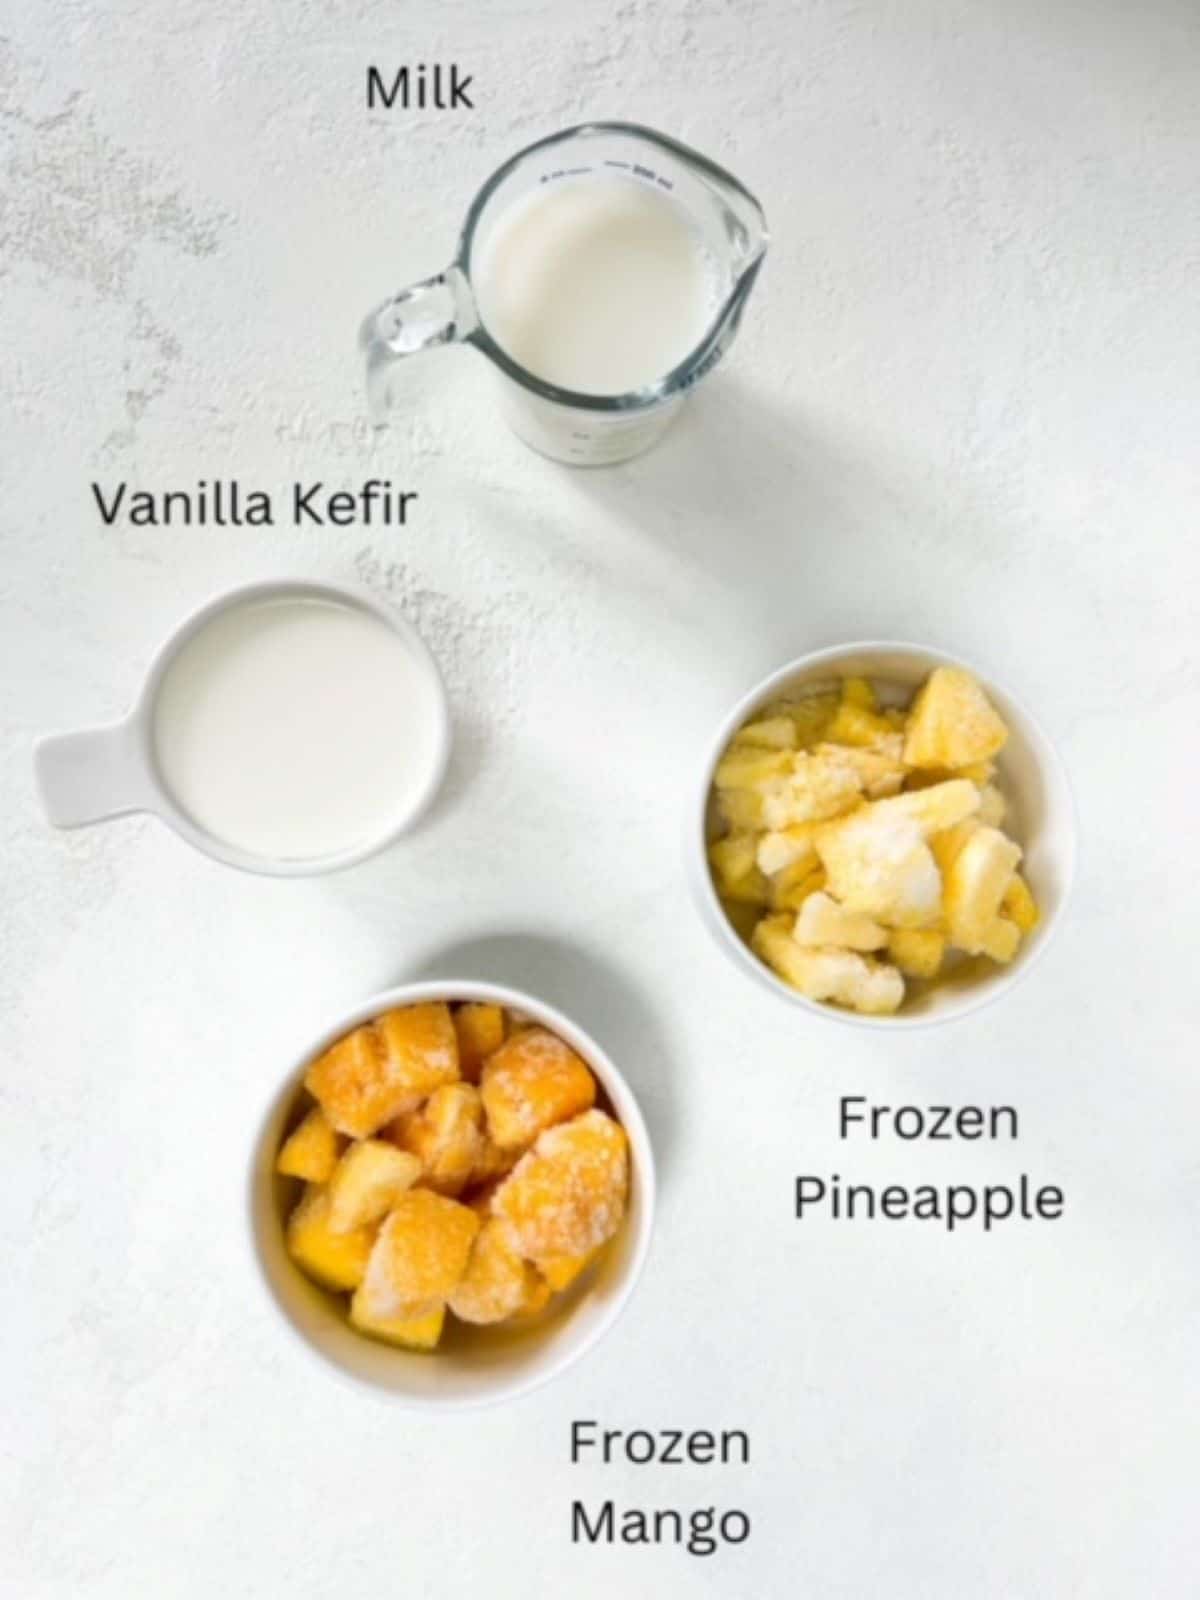 Milk, kefir, frozen pineapple, and frozen mango in individual serving-ware, labeled.